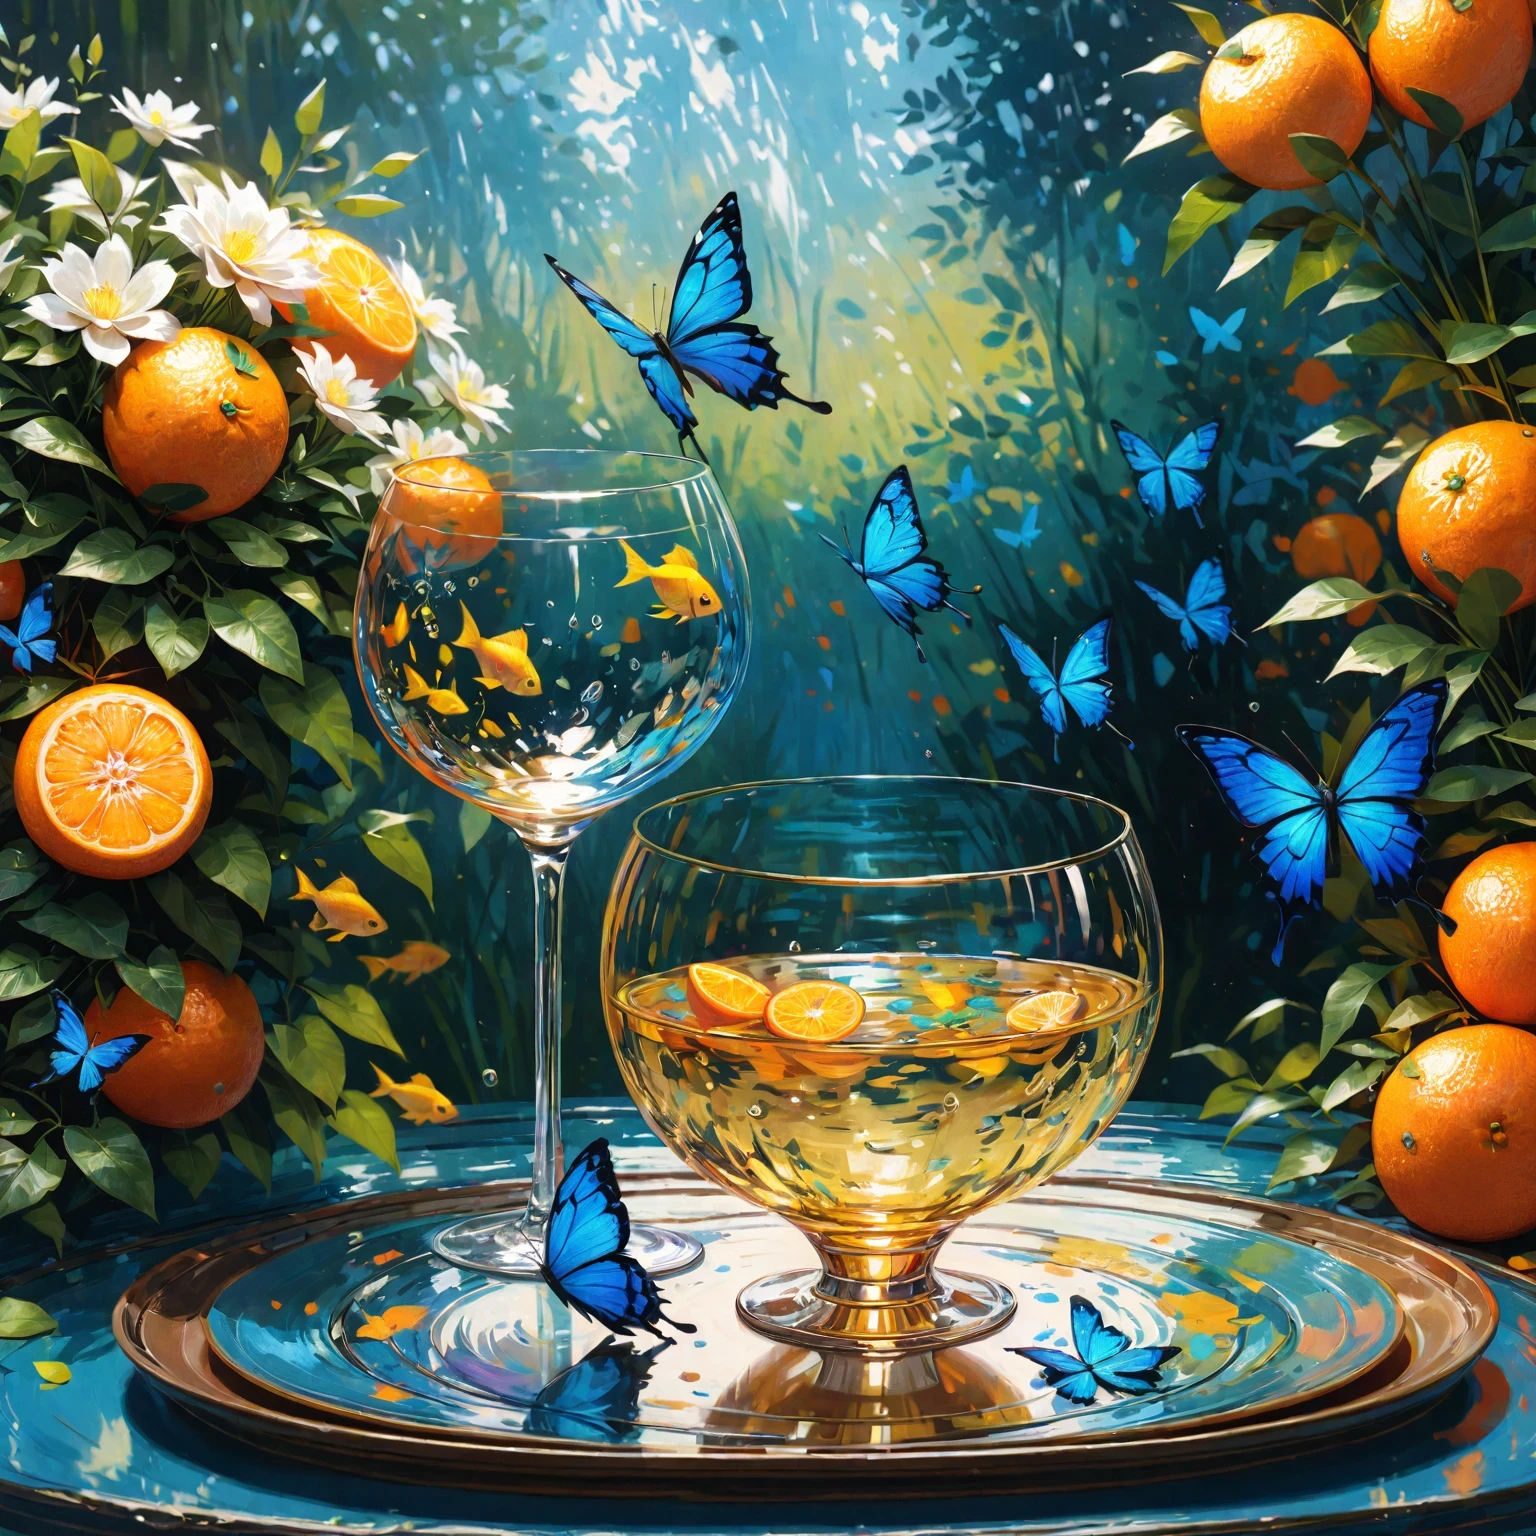 DIY31,A 떠는 acrylic painting featuring a blue butterfly dancing among the lush flowers of a garden, 투명한 유리컵 속에 황금빛 물고기가 자유롭게 헤엄치고 있는 모습. 유리가 담긴 접시의 상세한 패턴, 푸른 나비의 섬세한 얼룩무늬 날개가 선명하게 보입니다.. 인상적인 스타일의 차분한 정원 배경이 평온함을 더해줍니다., 황금빛 물고기는 현장에 생생한 컬러와 에너지를 더해줍니다.. 푸른나비와 황금물고기의 조화로운 상호작용, 유리컵의 미묘한 빛 반사로 깊이와 입체감을 만들어냅니다.. 풍부한 블루스 팔레트, 오렌지, 그리고 노란색이 섞여있어요, 섬세한 아크릴 붓놀림으로 정교하게 담아냈습니다.. 높은 해상도, 평온함과 즐거운 분위기를 자아내는 고품질 예술 작품, 초현실적, 상세한, 화려한, 떠는, 고요한 정원, 클로드 모네 같은 예술가들의 작품, 떠는 colors, 초현실주의, 높은 다이내믹 레인지, 포토리얼리즘.
